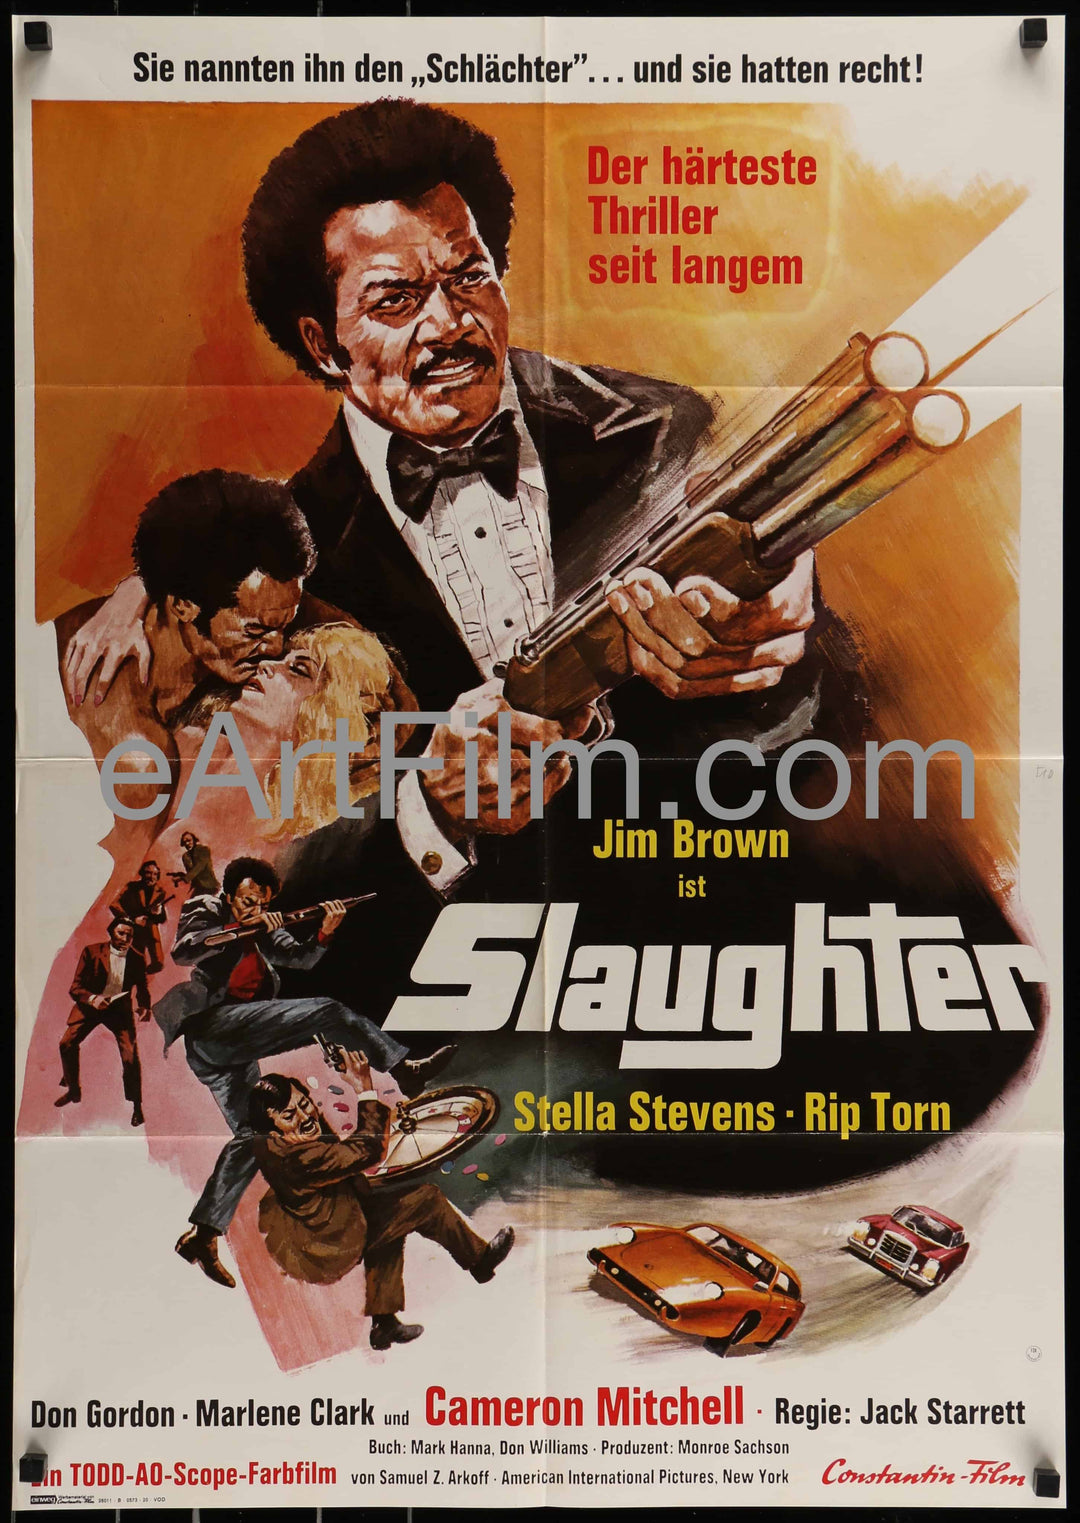 eArtFilm.com German "A1" Movie Poster (23"x33") Slaughter-Jim Brown-Stella Stevens-blaxploitation action thriller-1973-23x33